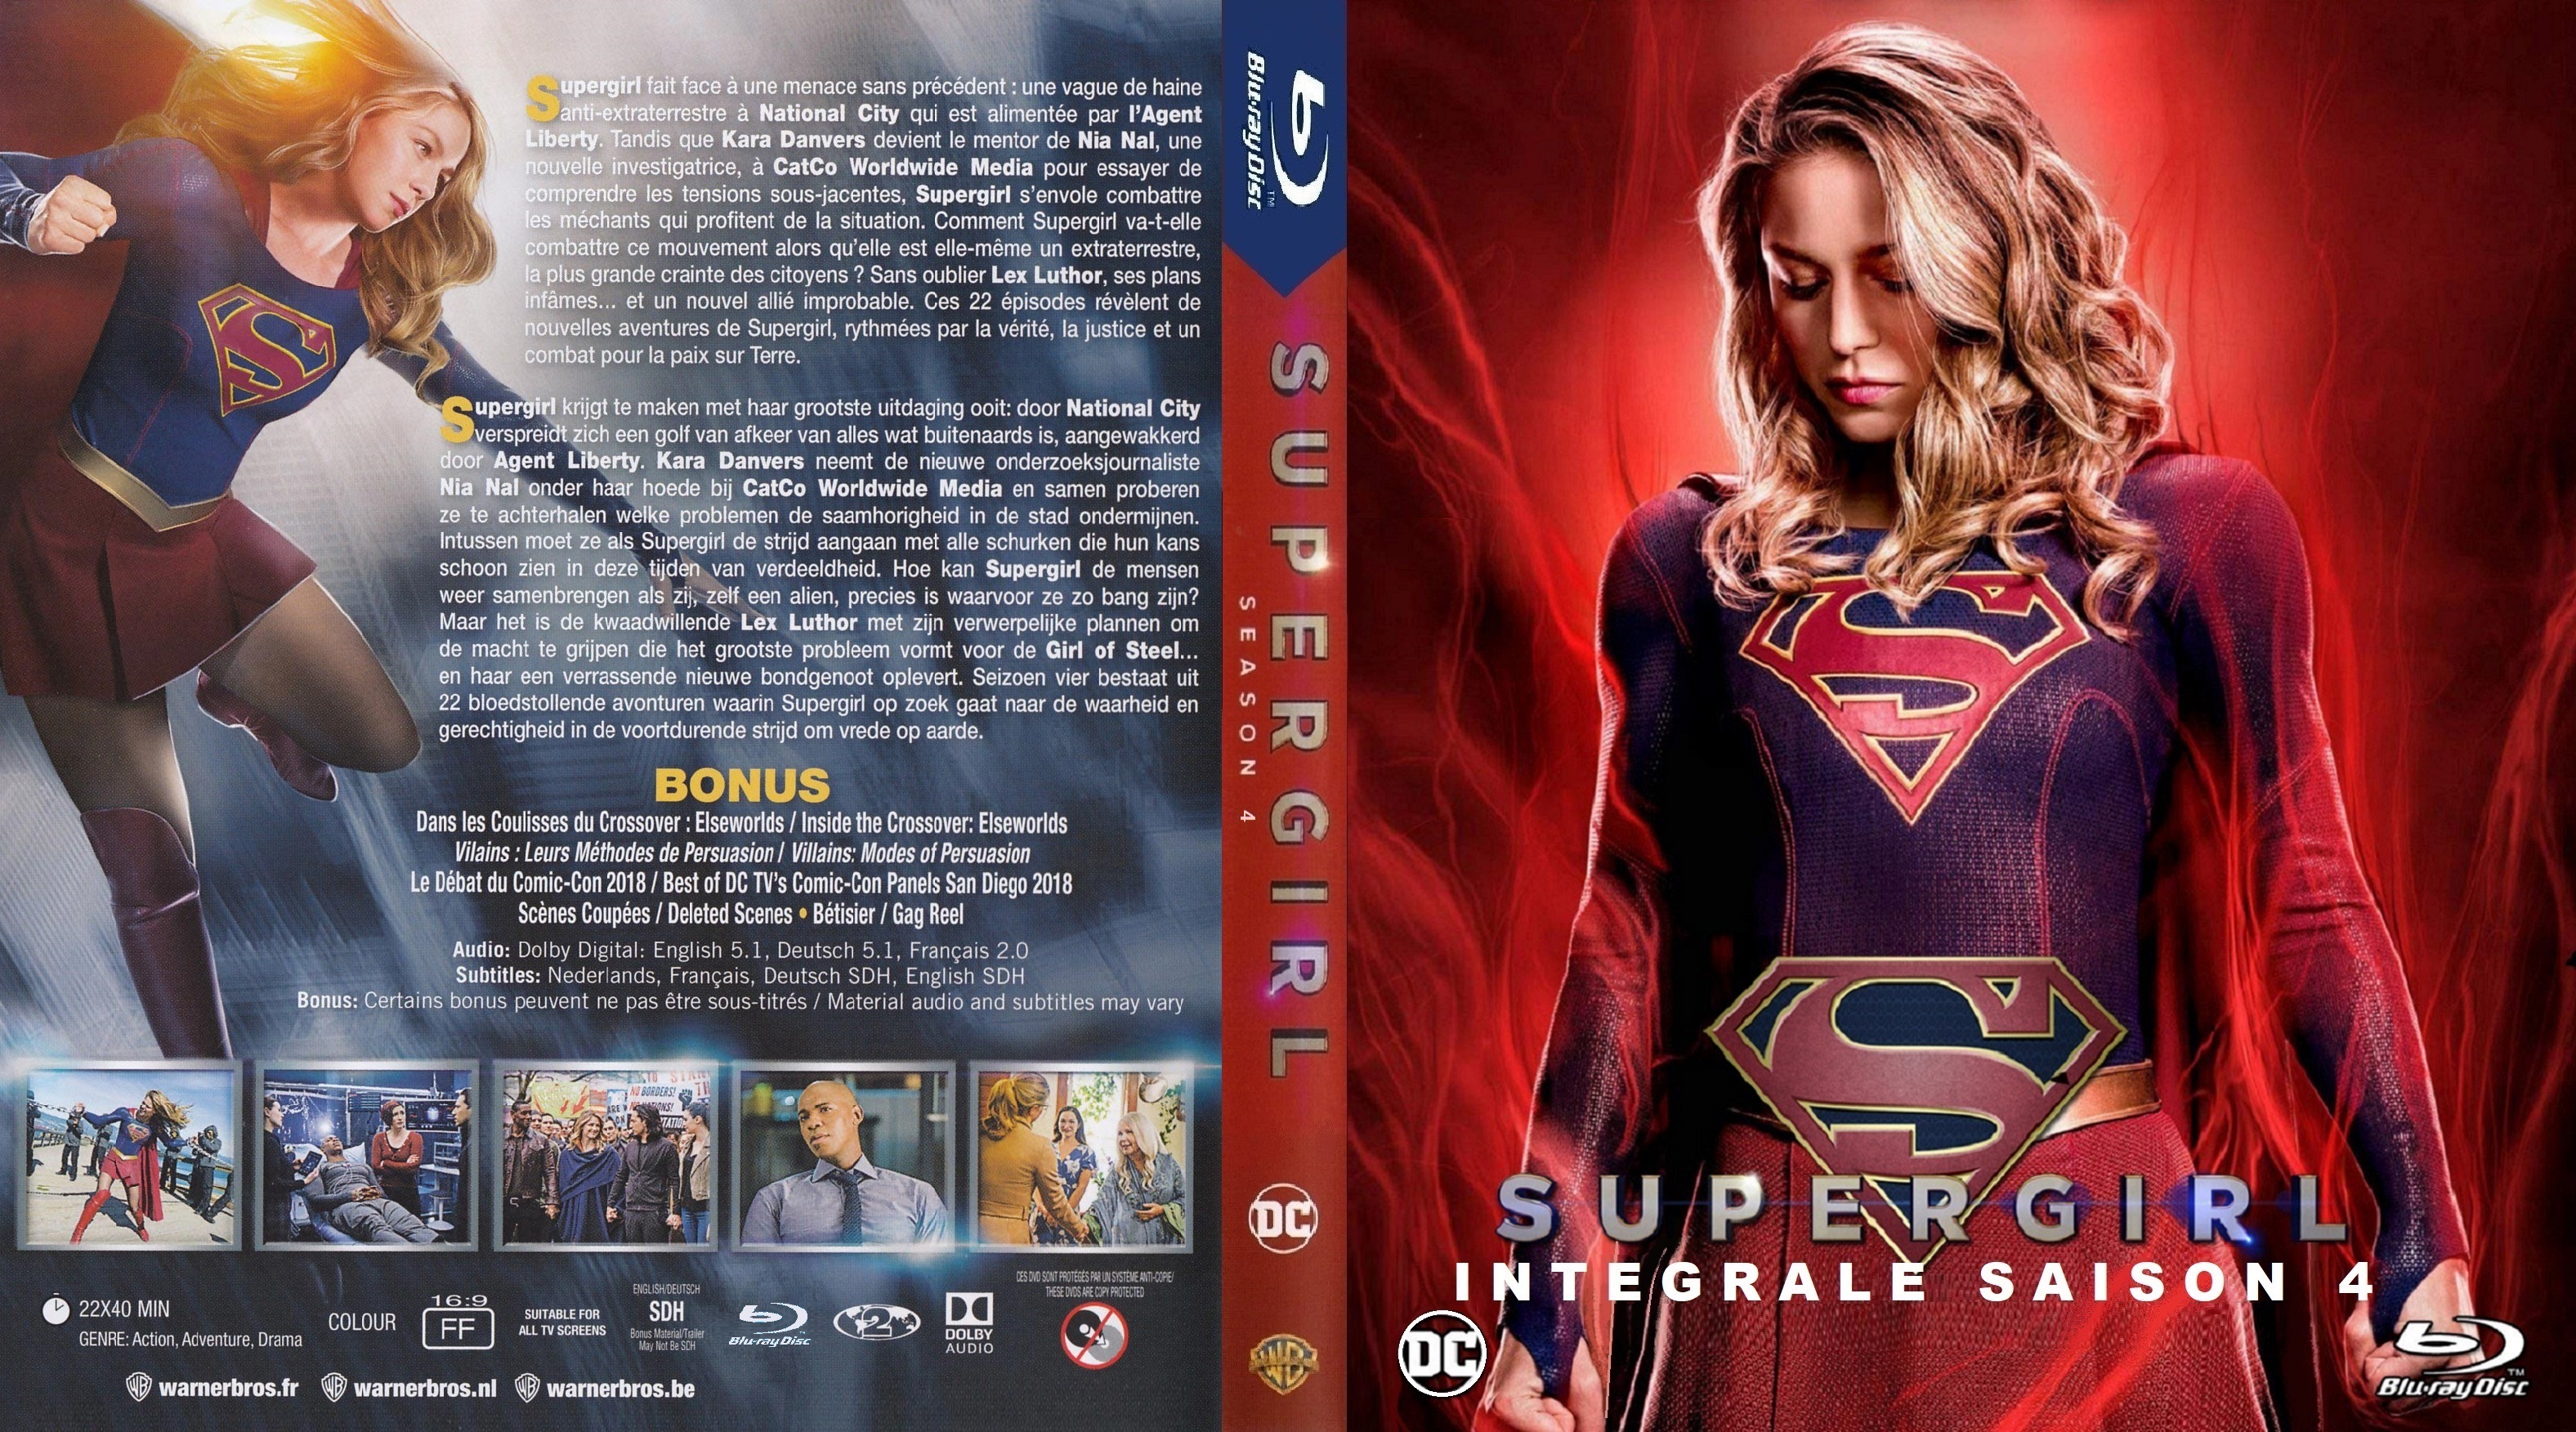 Jaquette DVD Supergirl saison 4 custom (BLU-RAY)